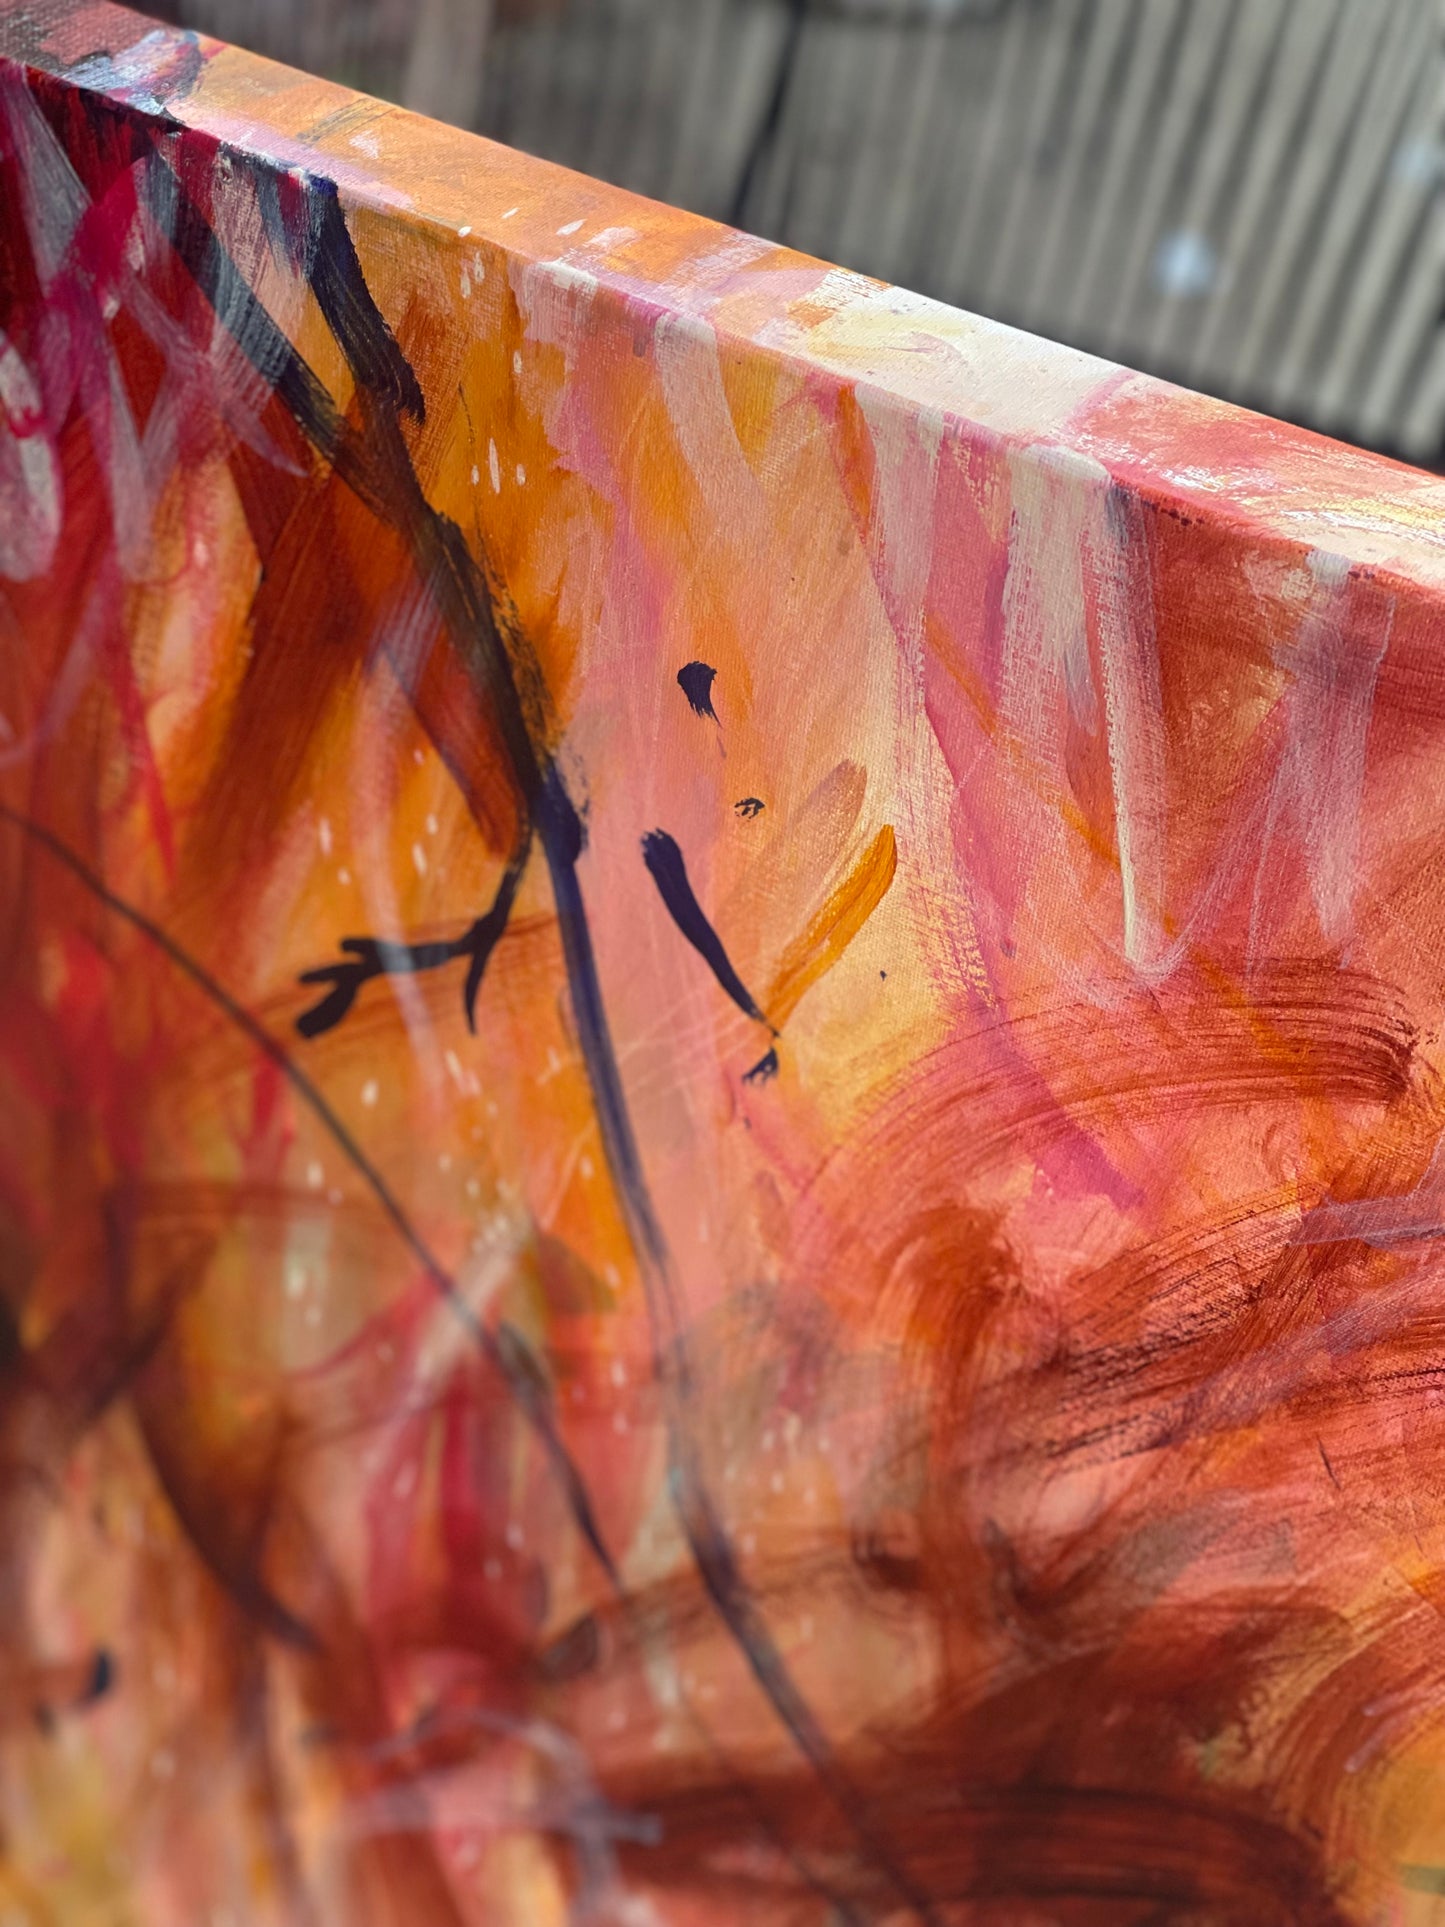 When the wattlebird is still - acrylic artwork on canvas, 76x102cm